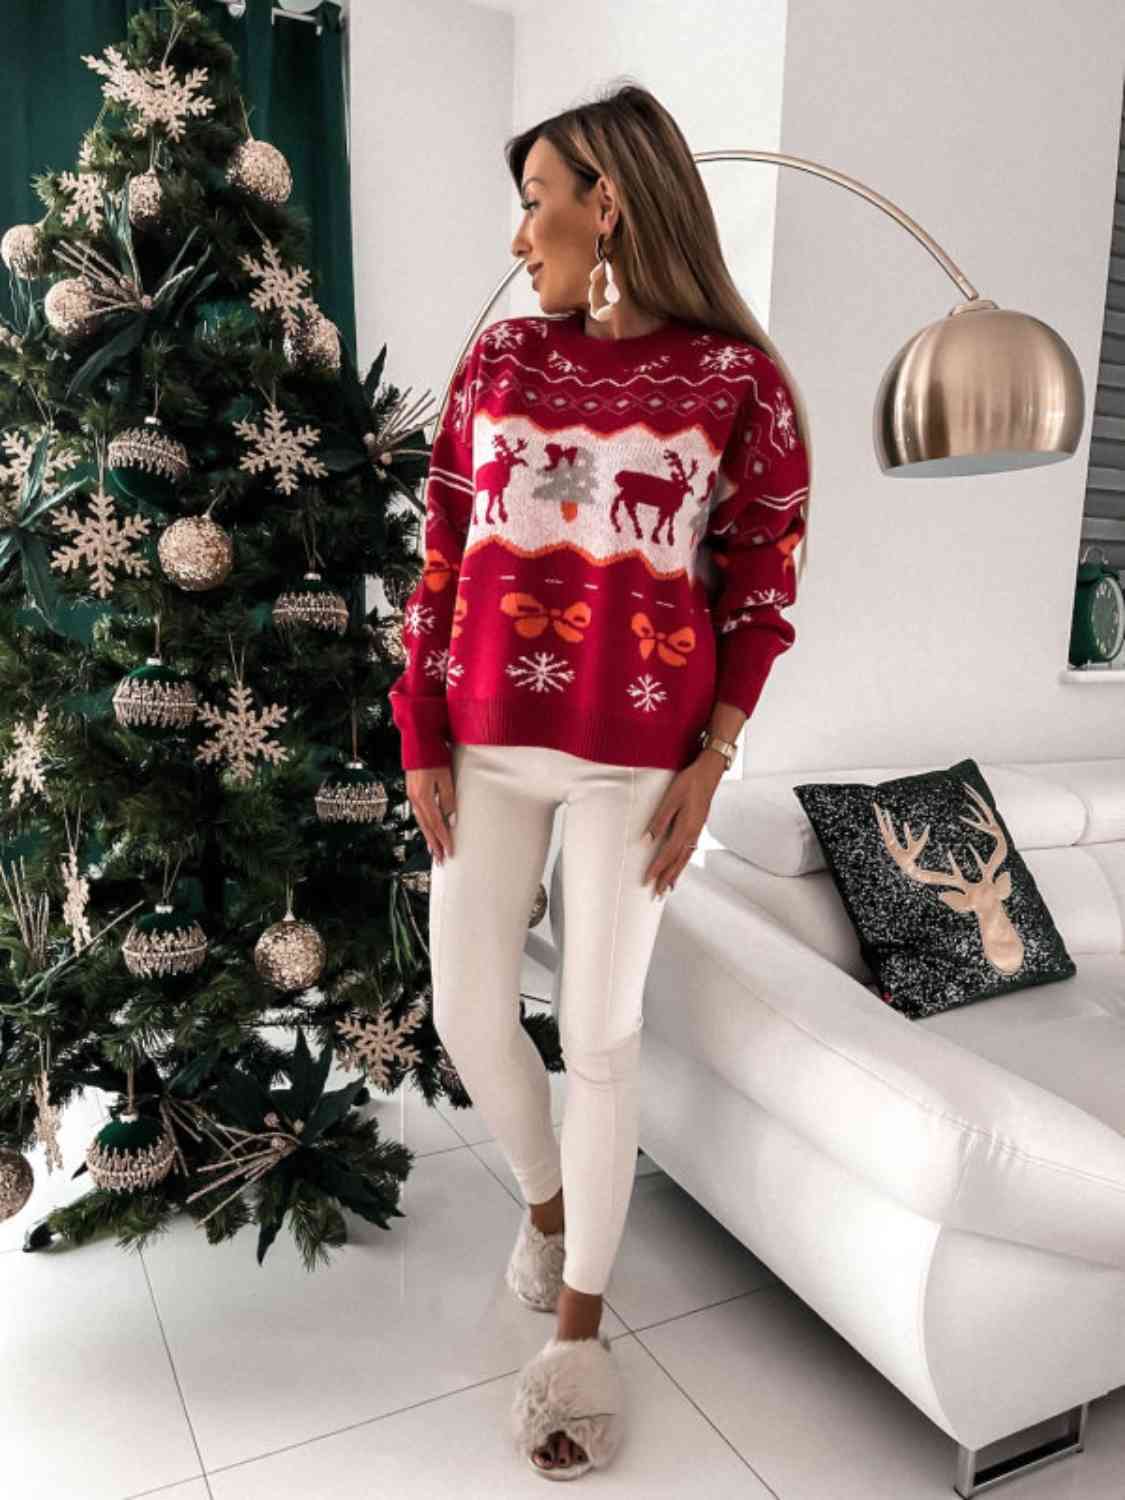 Reindeer Round Neck Sweater - Cowtown Bling N Things